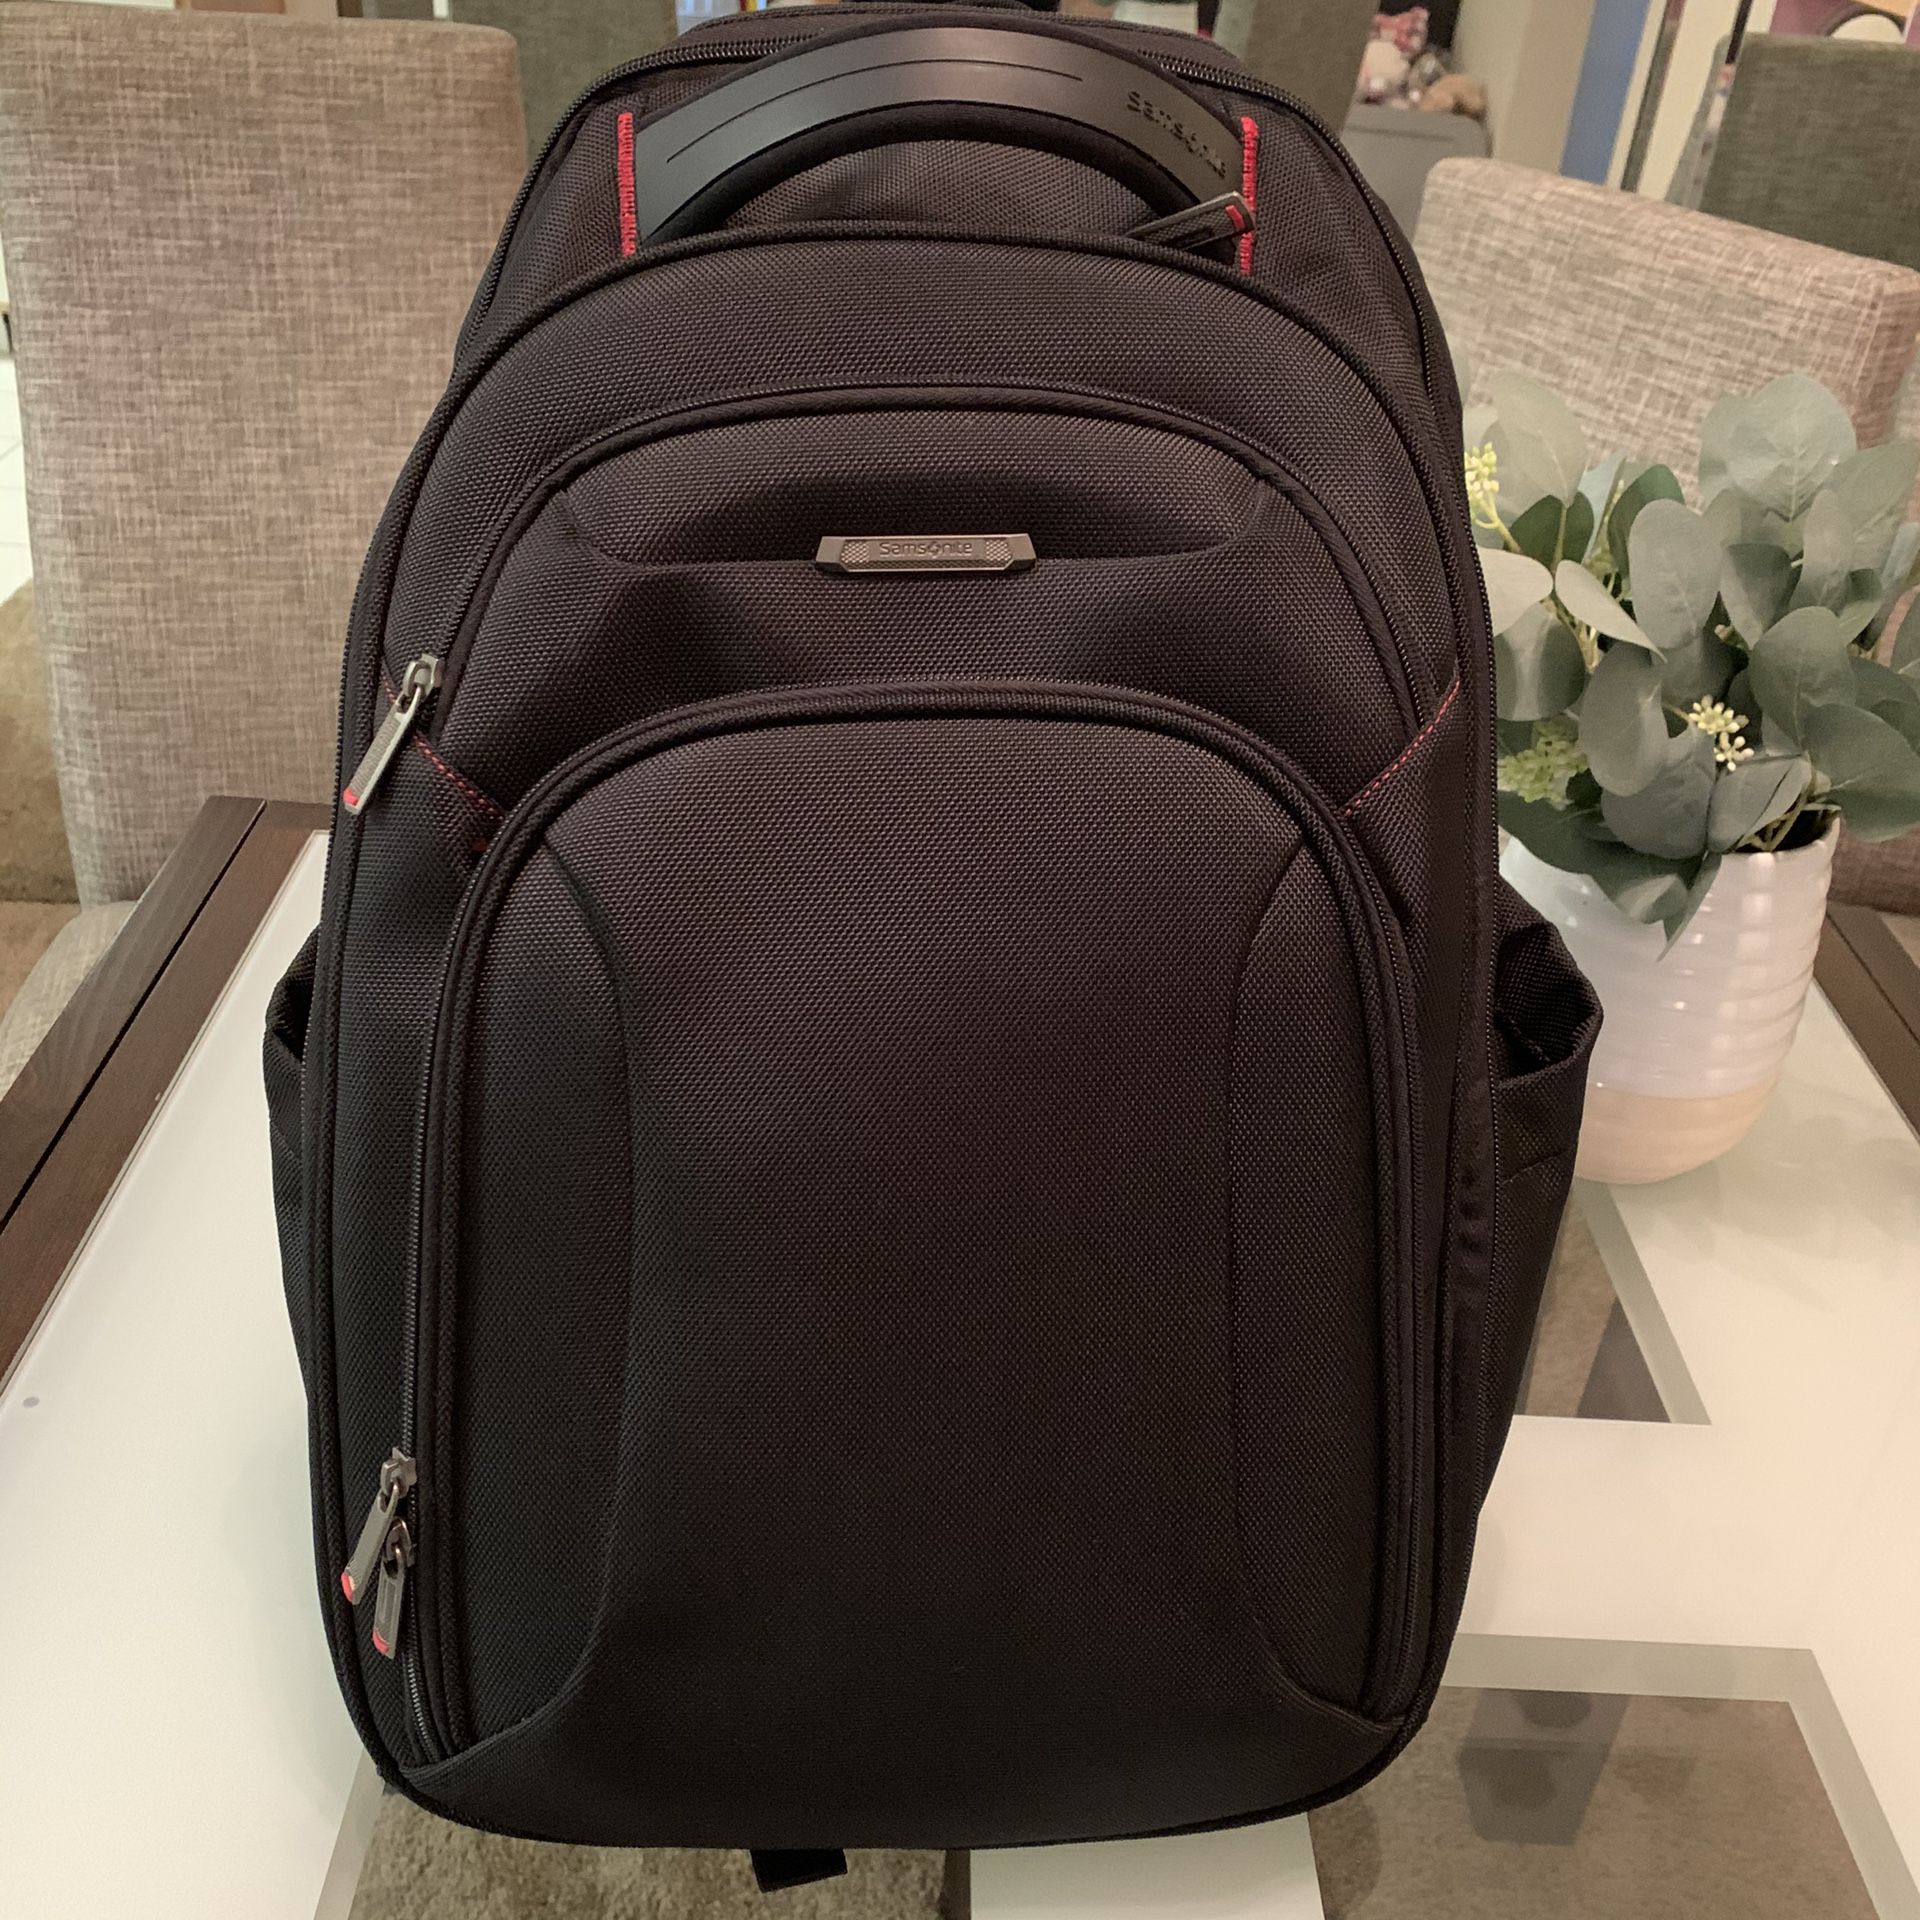 Samsonite - Xenon 3 Laptop Backpack - Black NEW